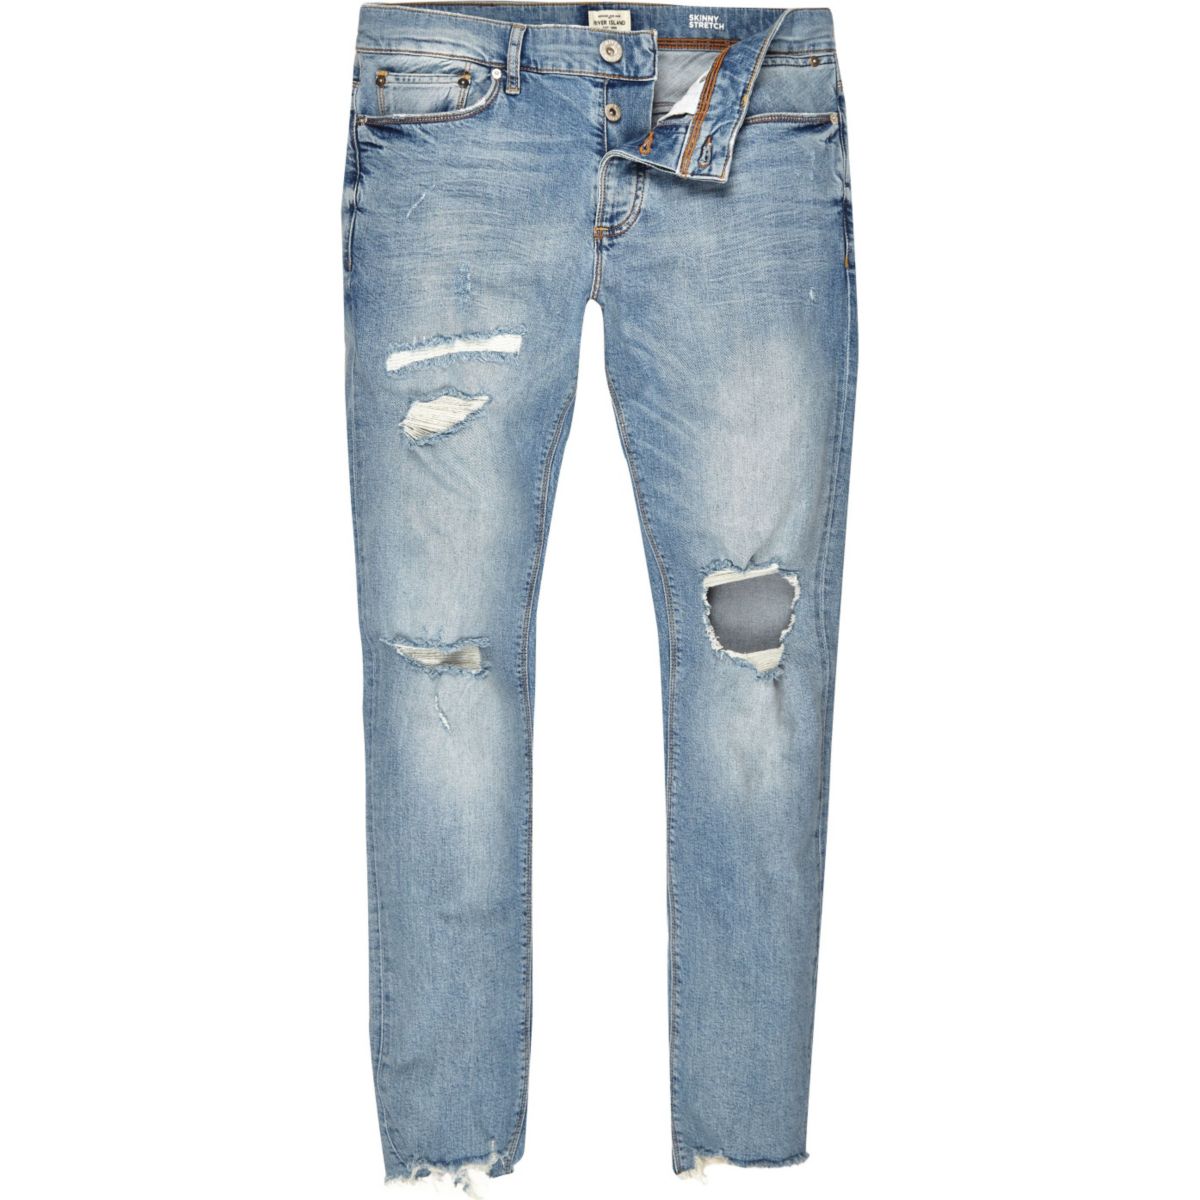 Light blue wash ripped Sid skinny jeans - Jeans - Sale - men